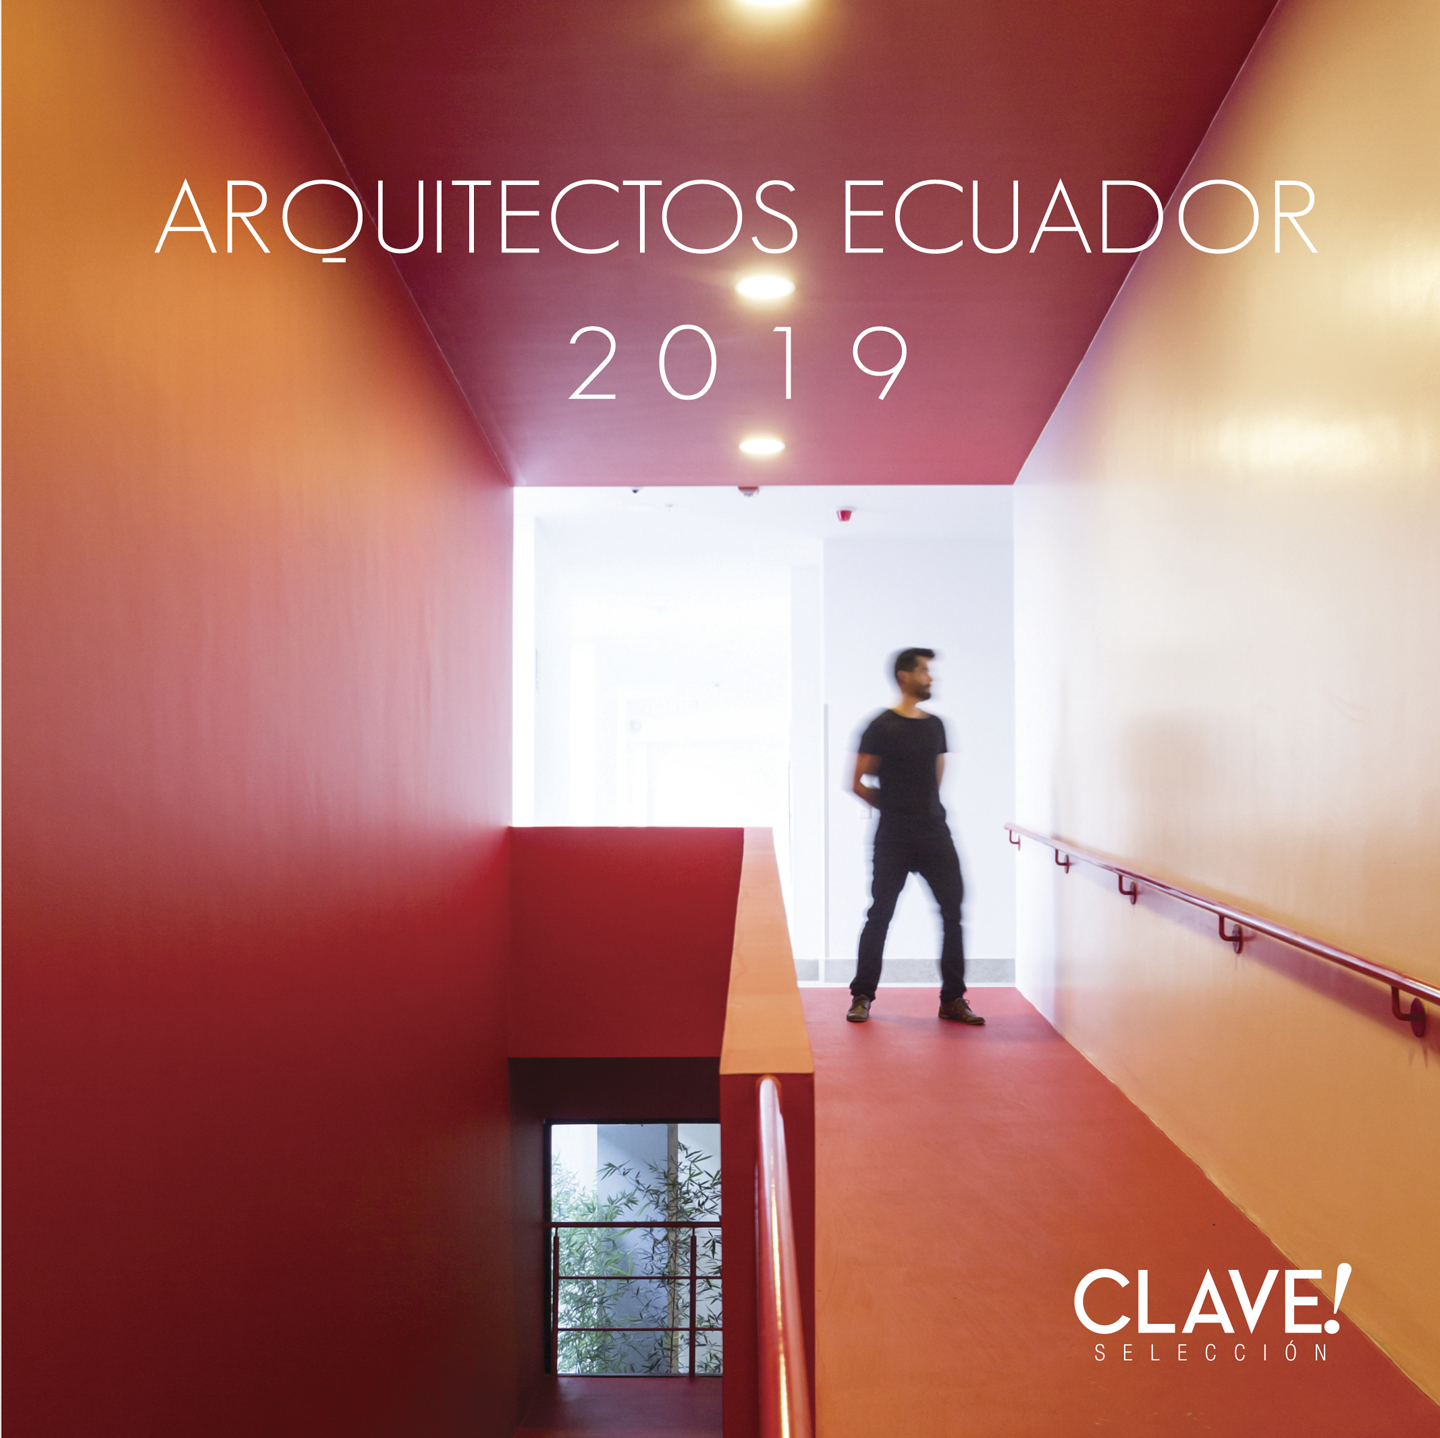 Portada Especial Arquitectos Ecuador 2019 - CLAVE